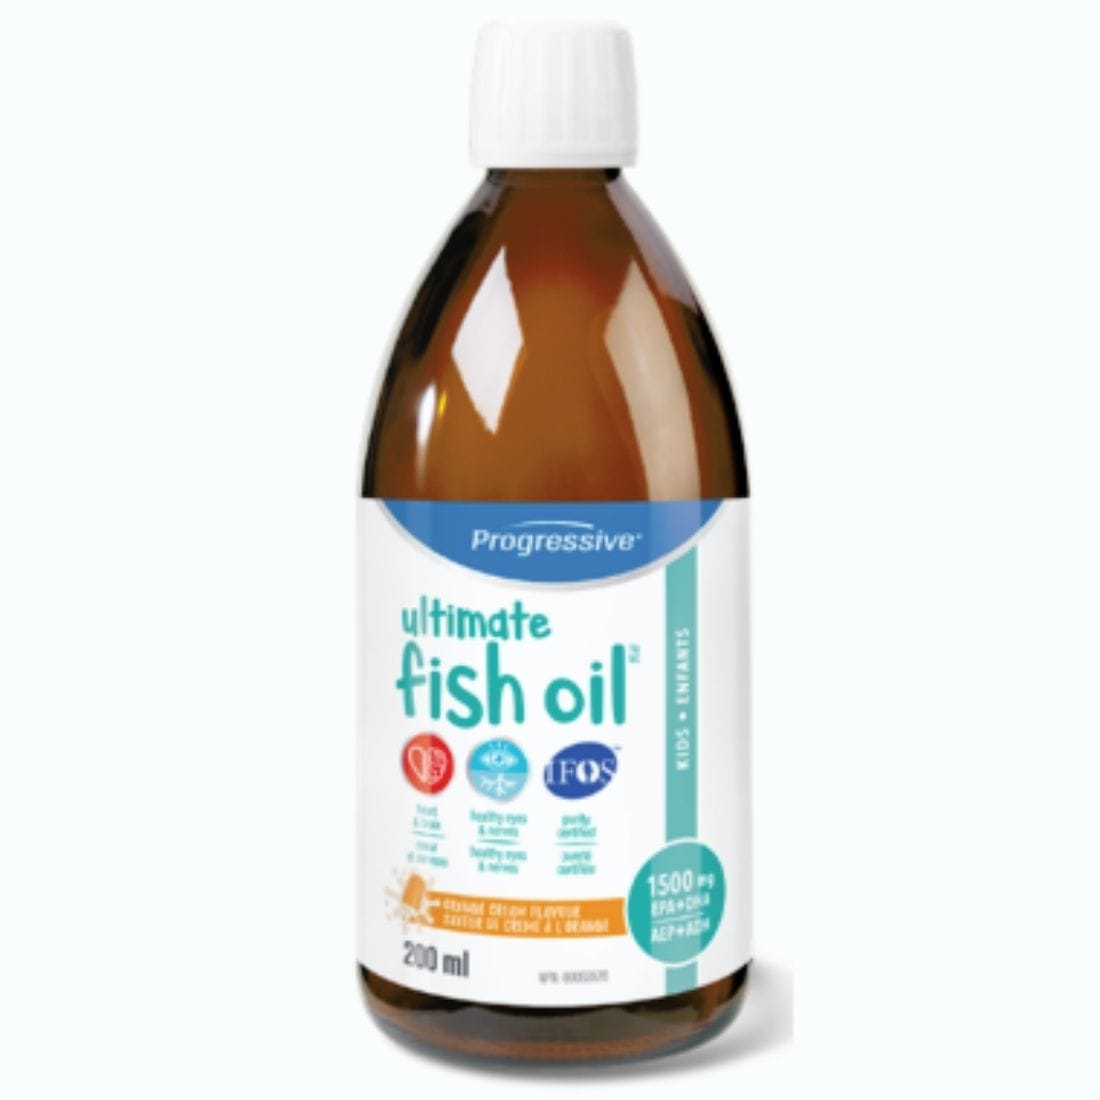 Progressive Ultimate Fish Oil For Kids Liquid (800mg DHA, 200mg EPA), 200ml